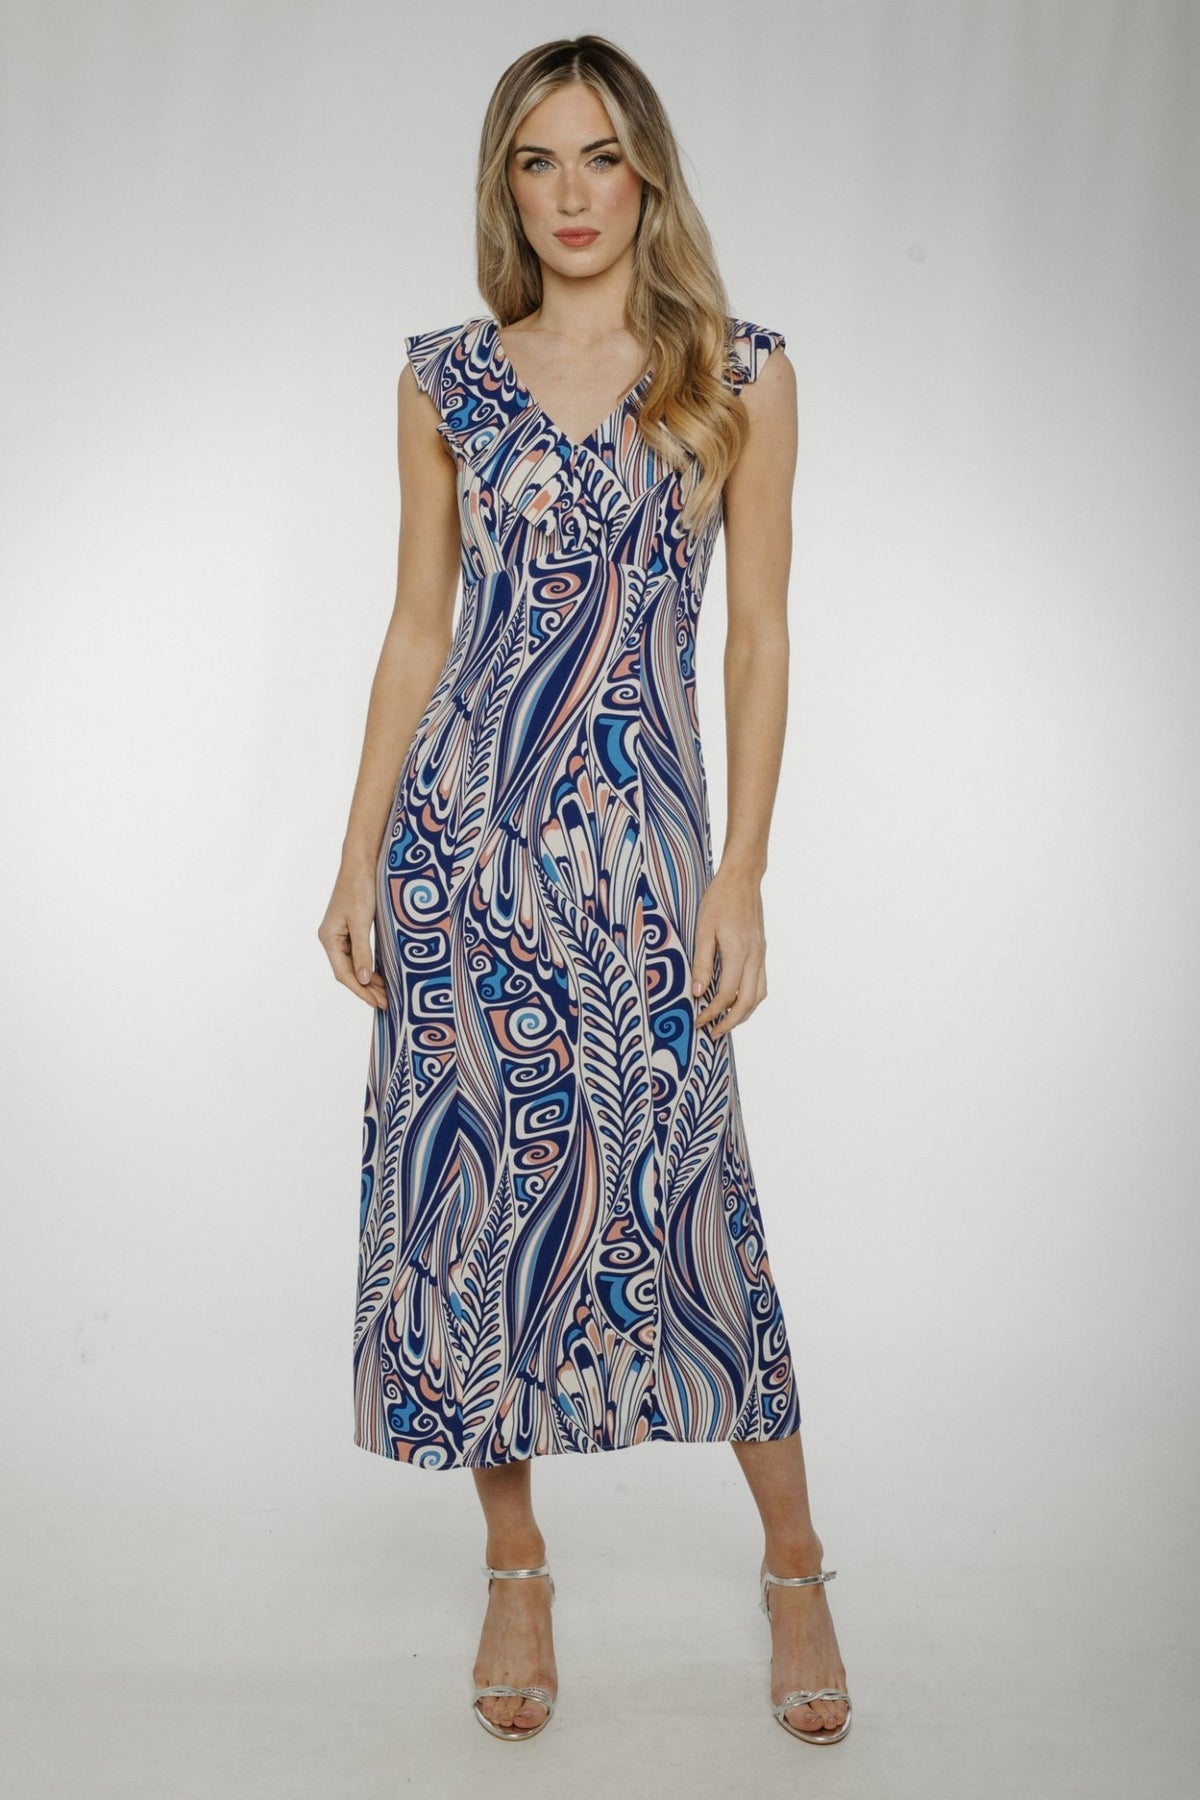 Eva Sleeveless Dress In Blue Mix - The Walk in Wardrobe